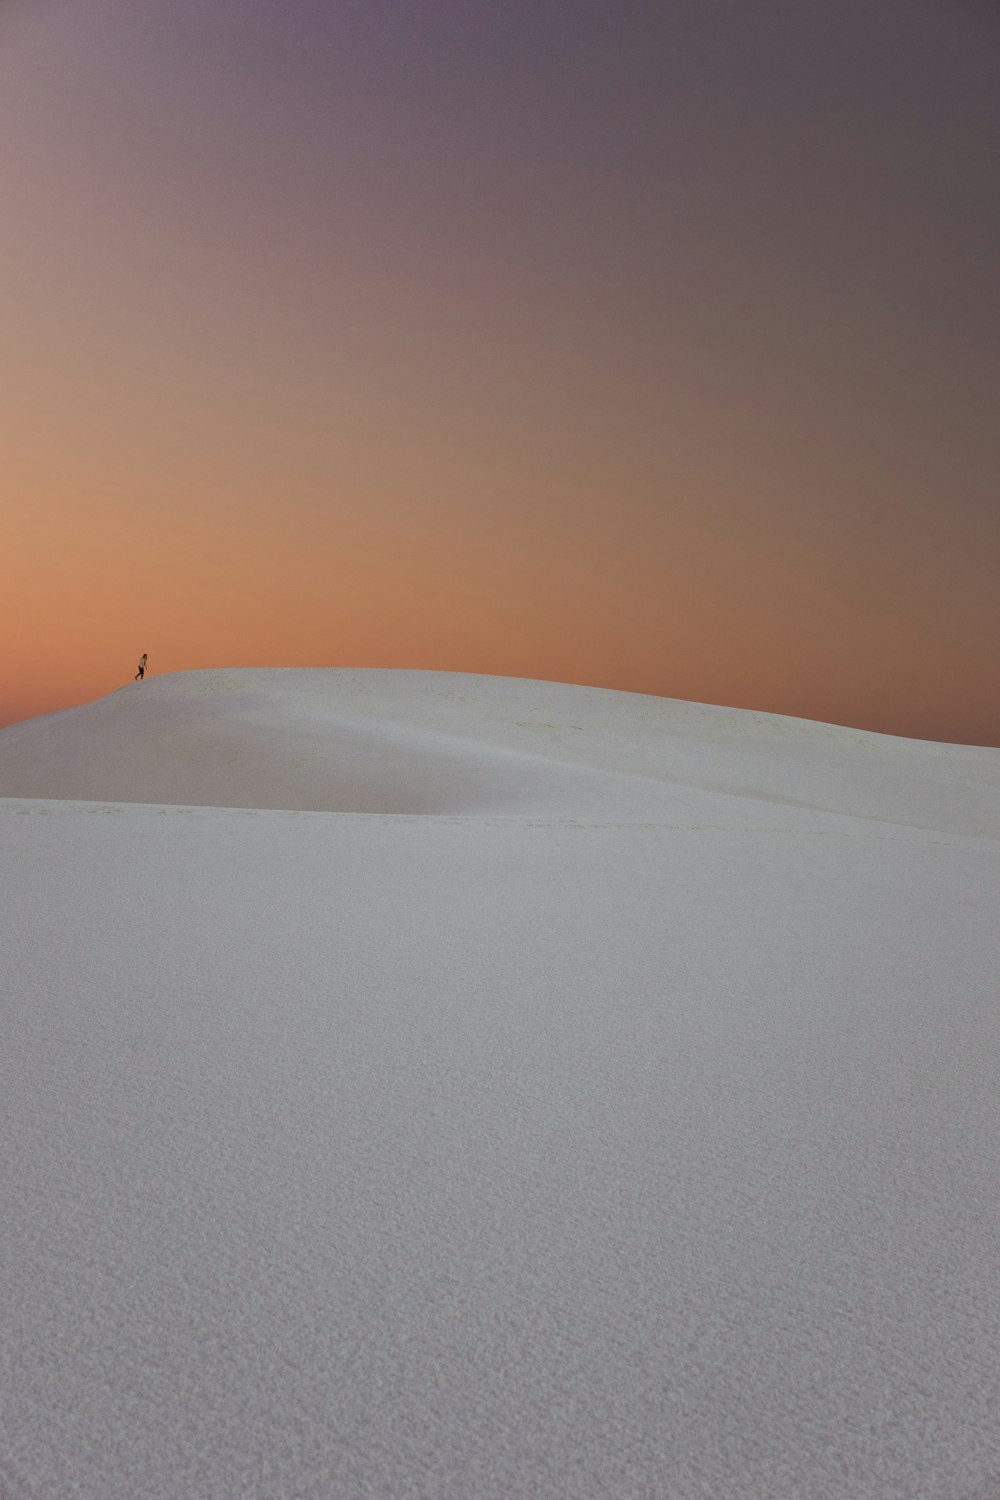 person walking in the desert dunes